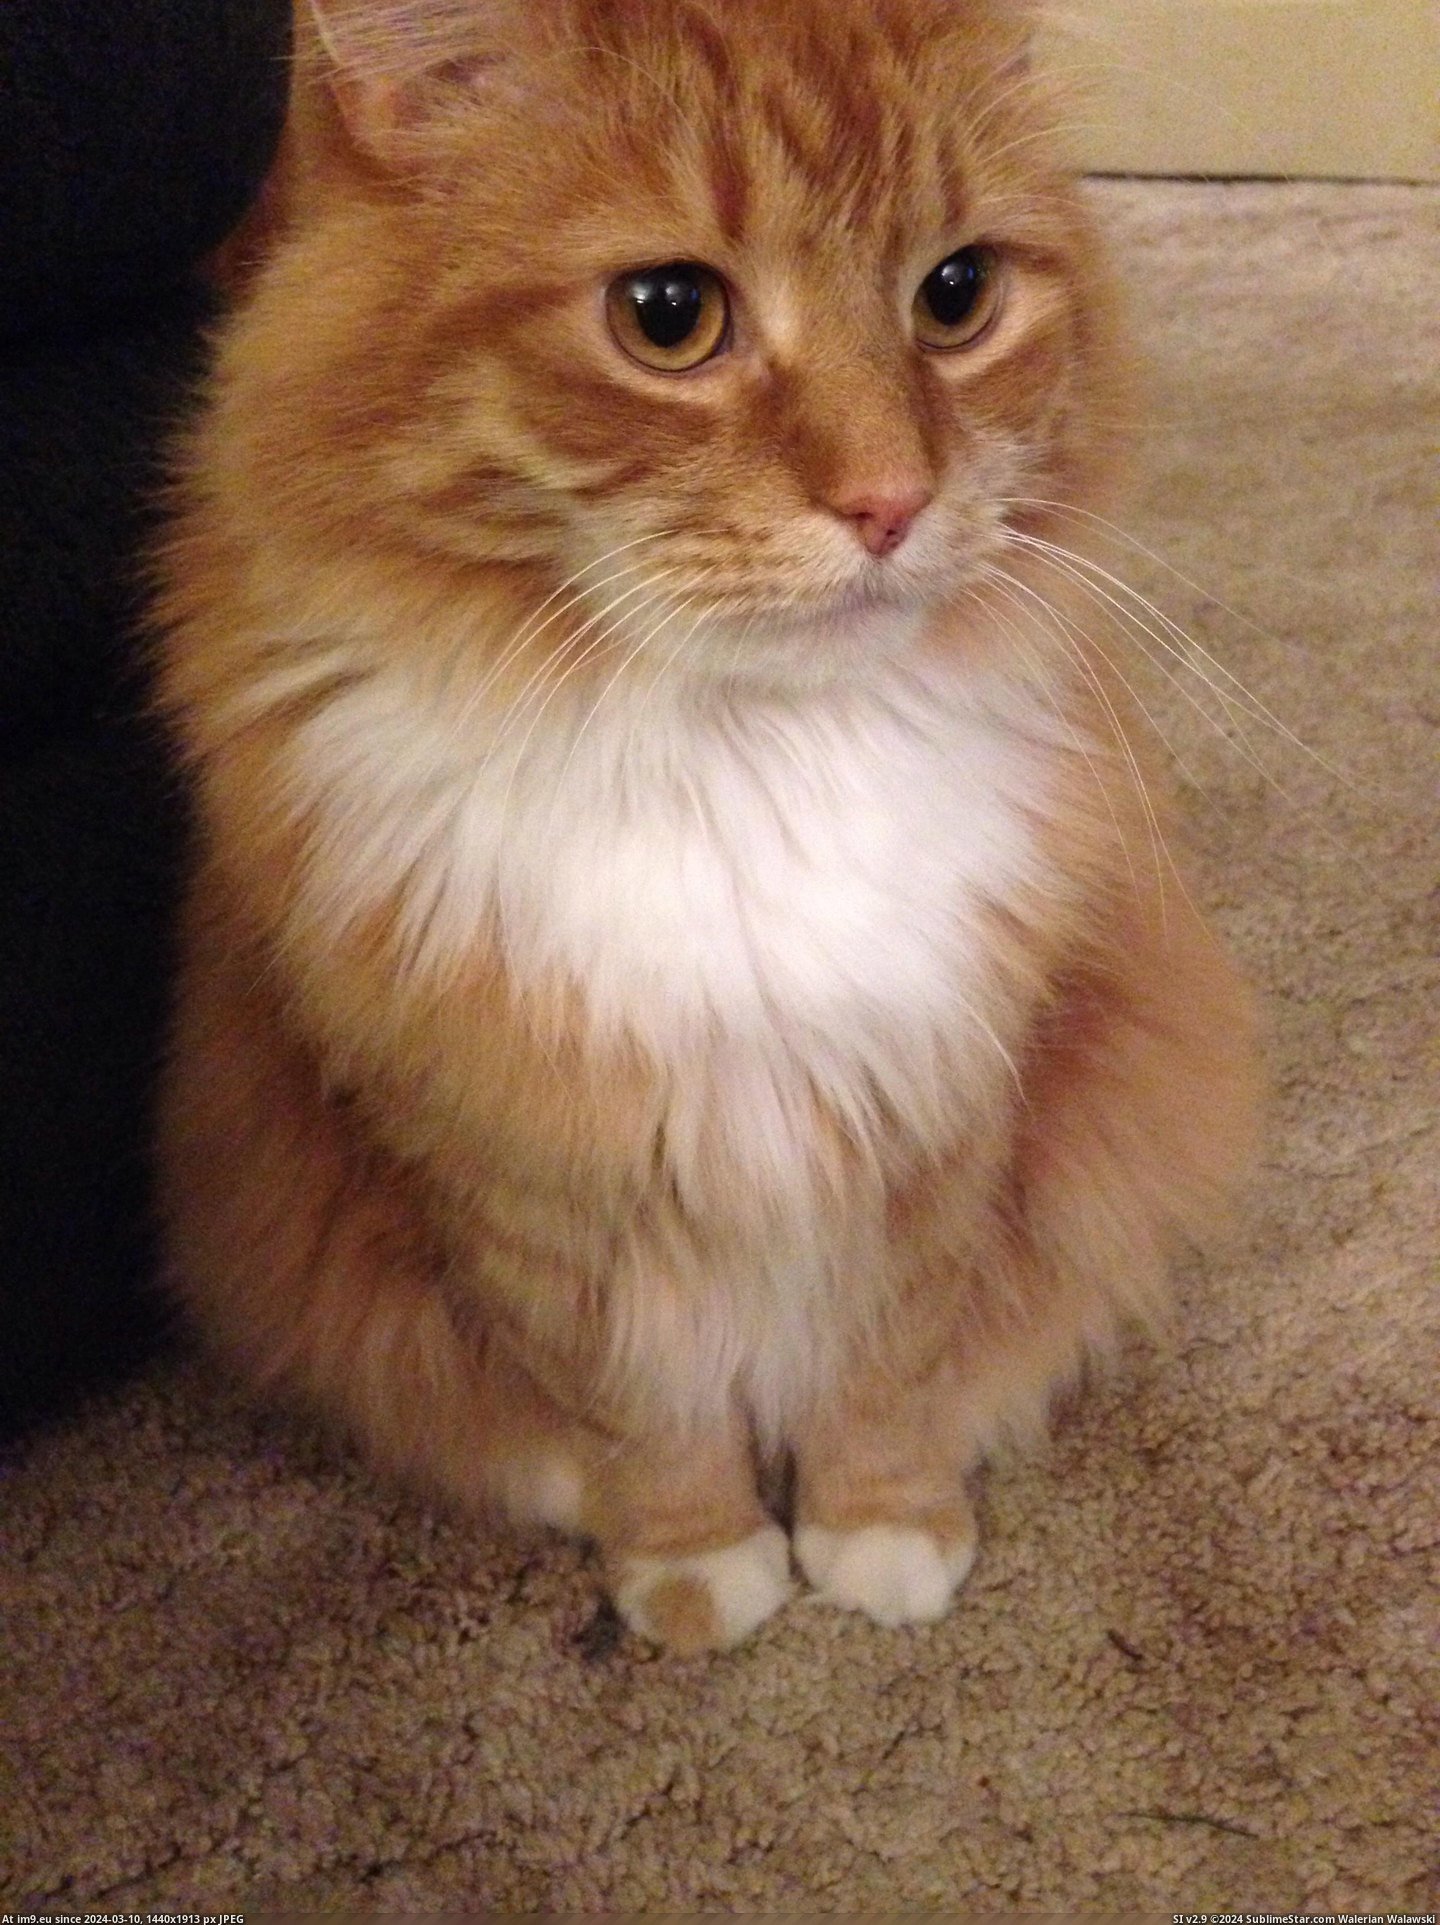 #One #Orange #Toe #Cat [Mildlyinteresting] My cat has one orange toe 2 Pic. (Изображение из альбом My r/MILDLYINTERESTING favs))